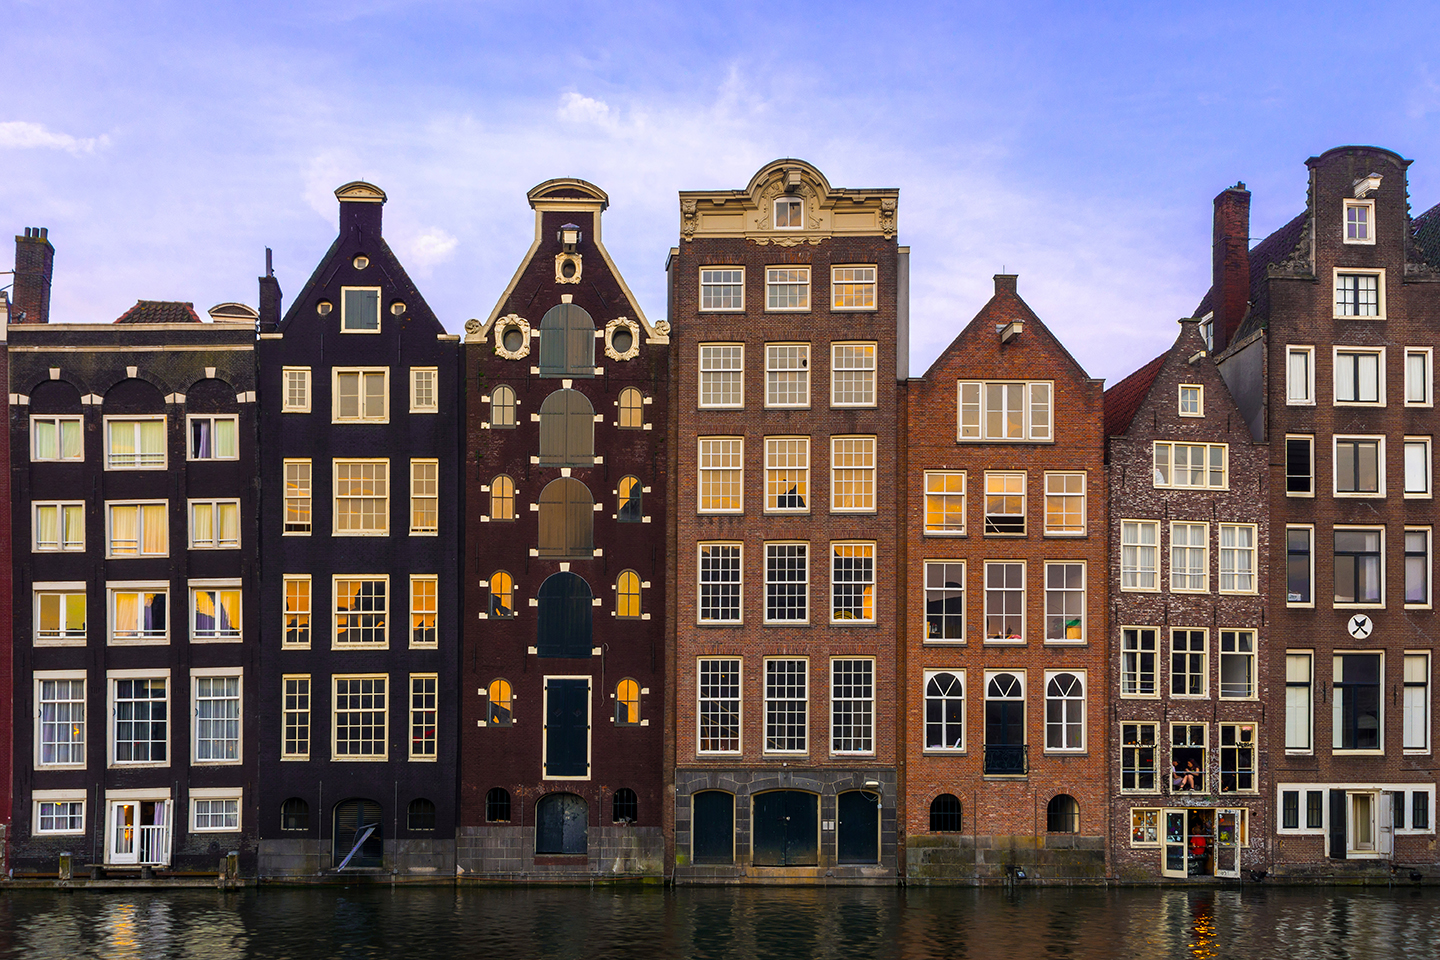   Amsterdam - Netherlands  